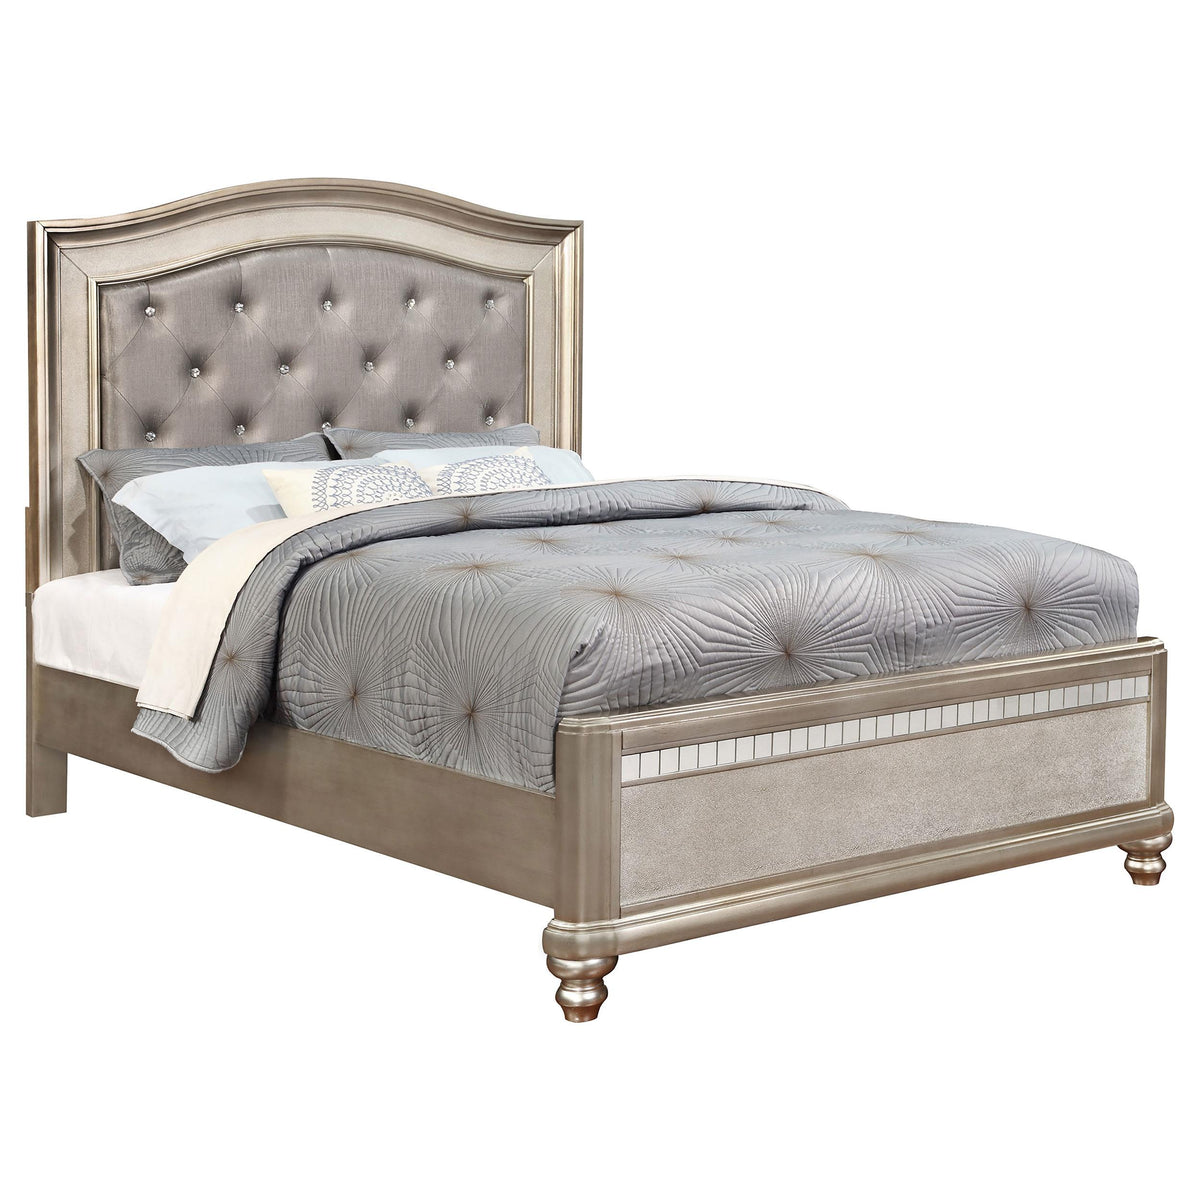 Bling Game Queen Panel Bed Metallic Platinum  Half Price Furniture